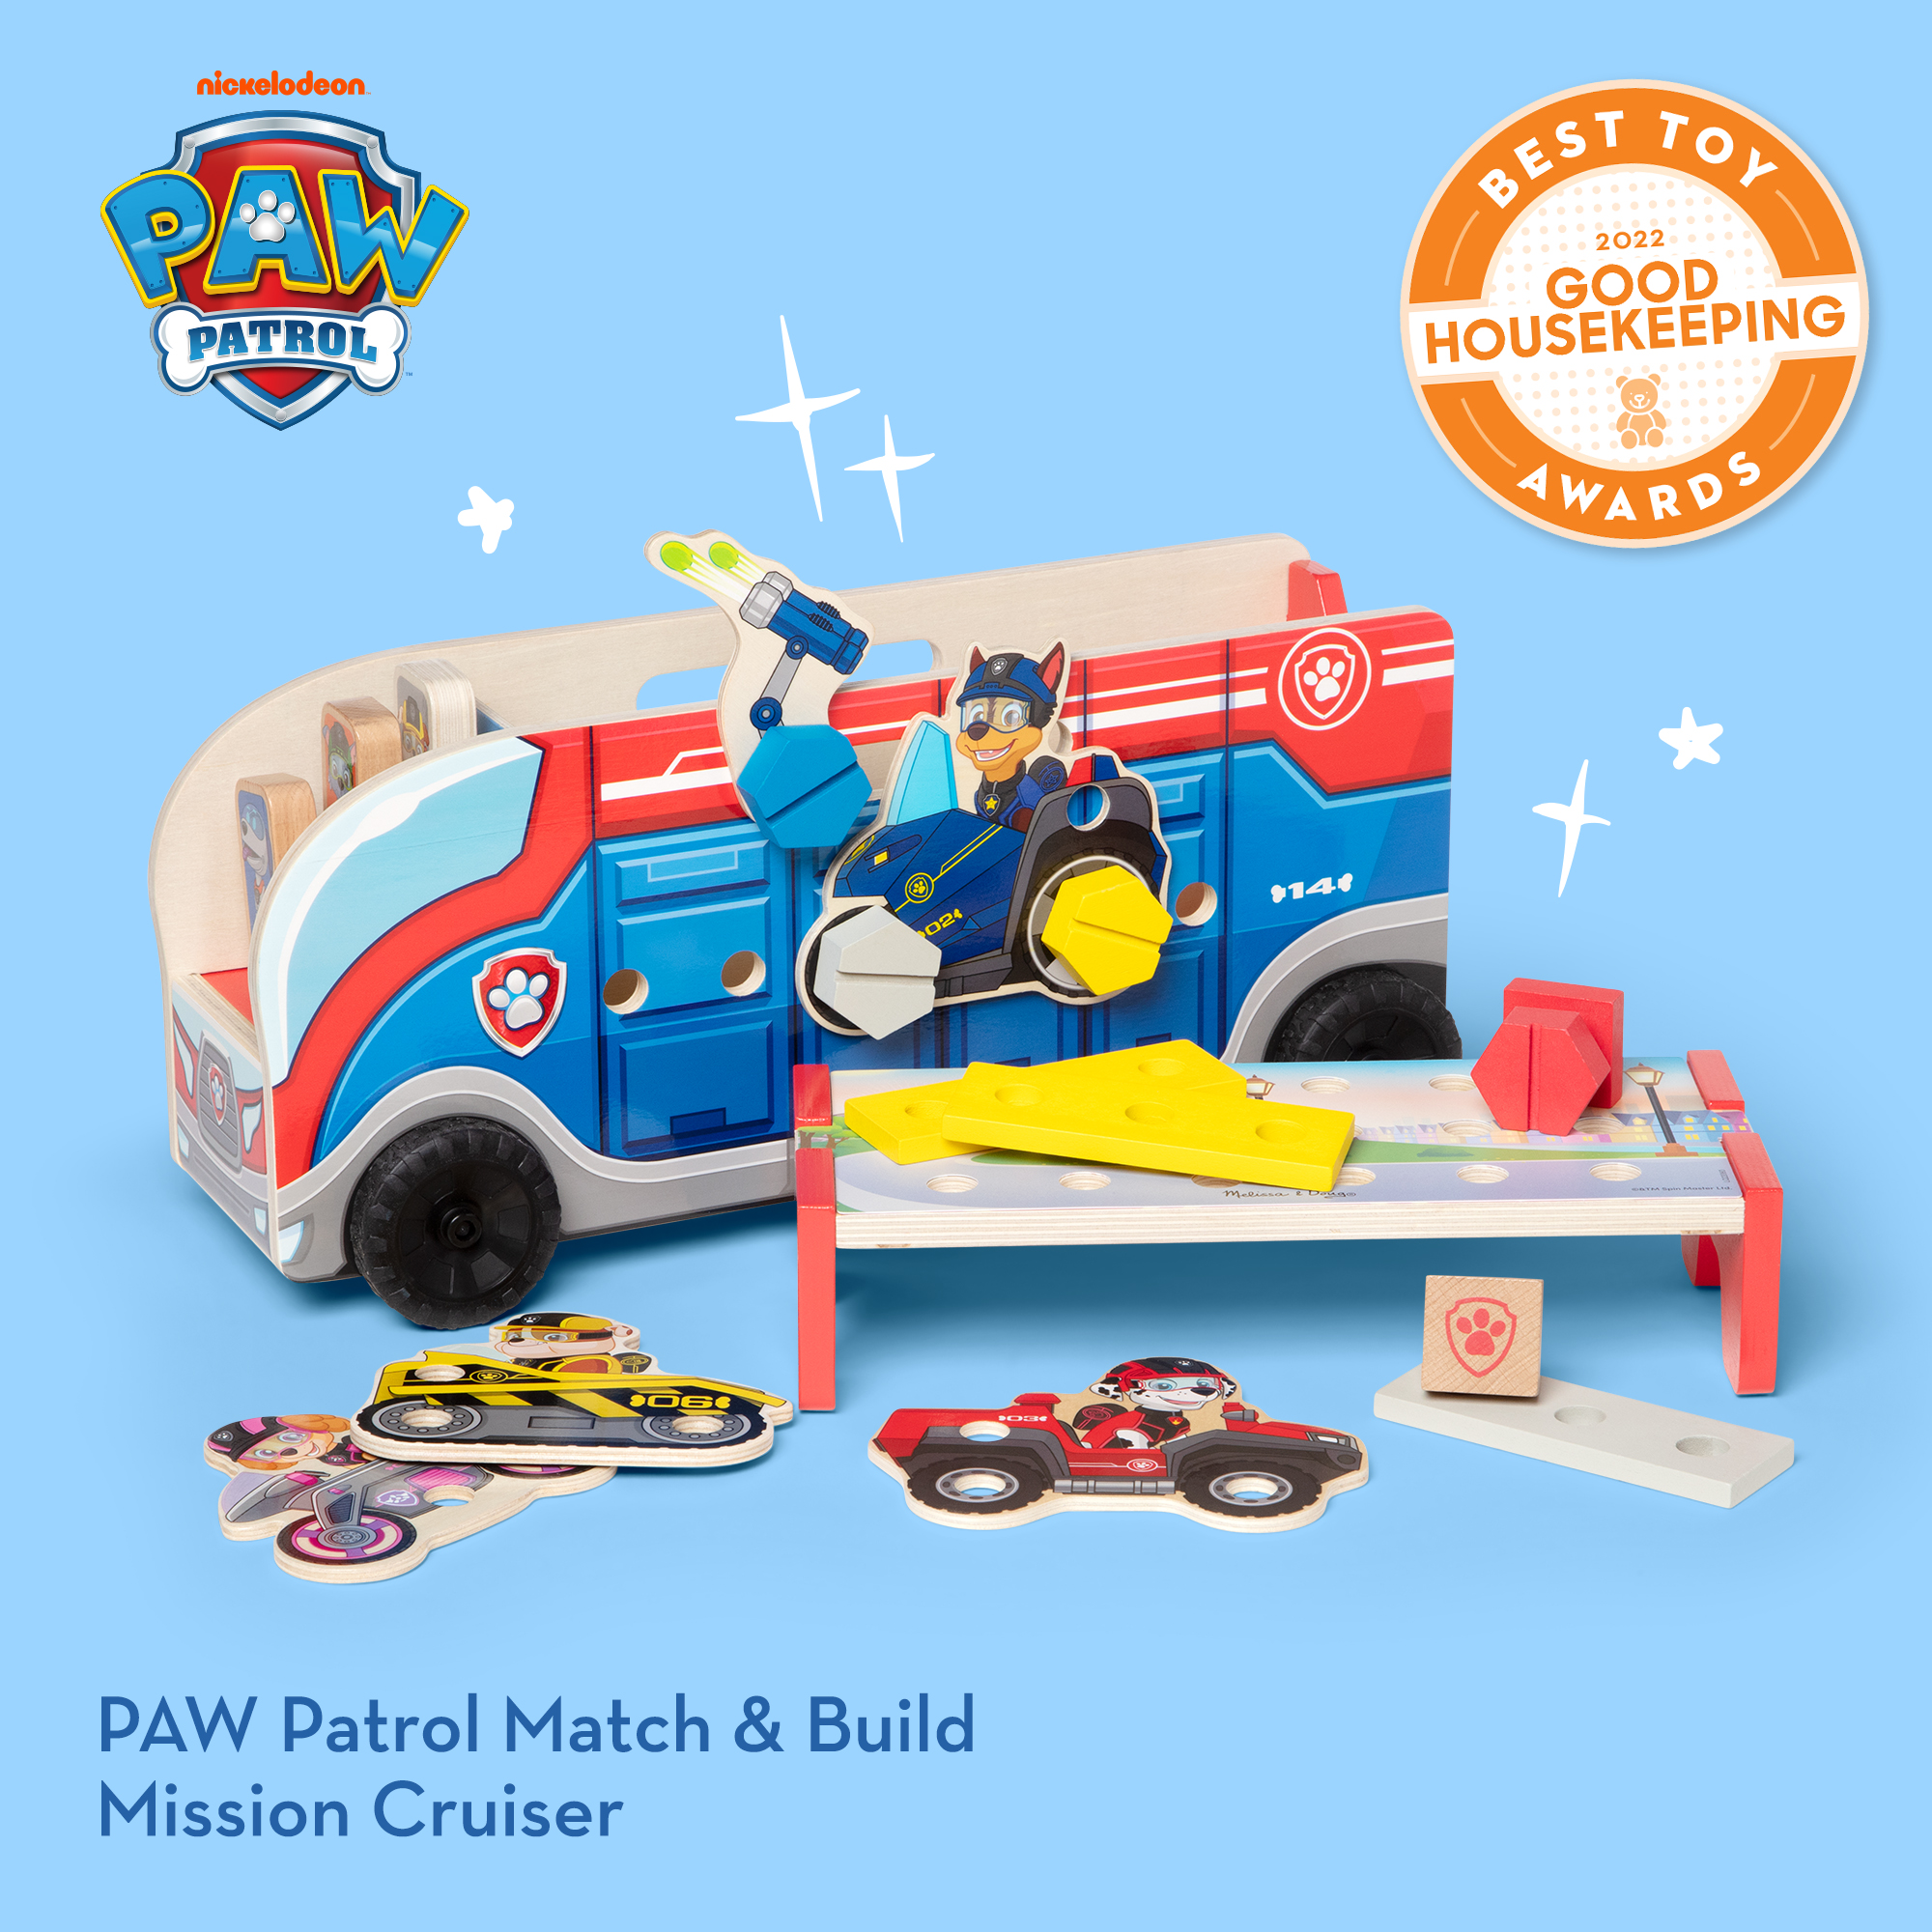 PAW Patrol Spy, Find & Rescue Play SetMelissa & Doug